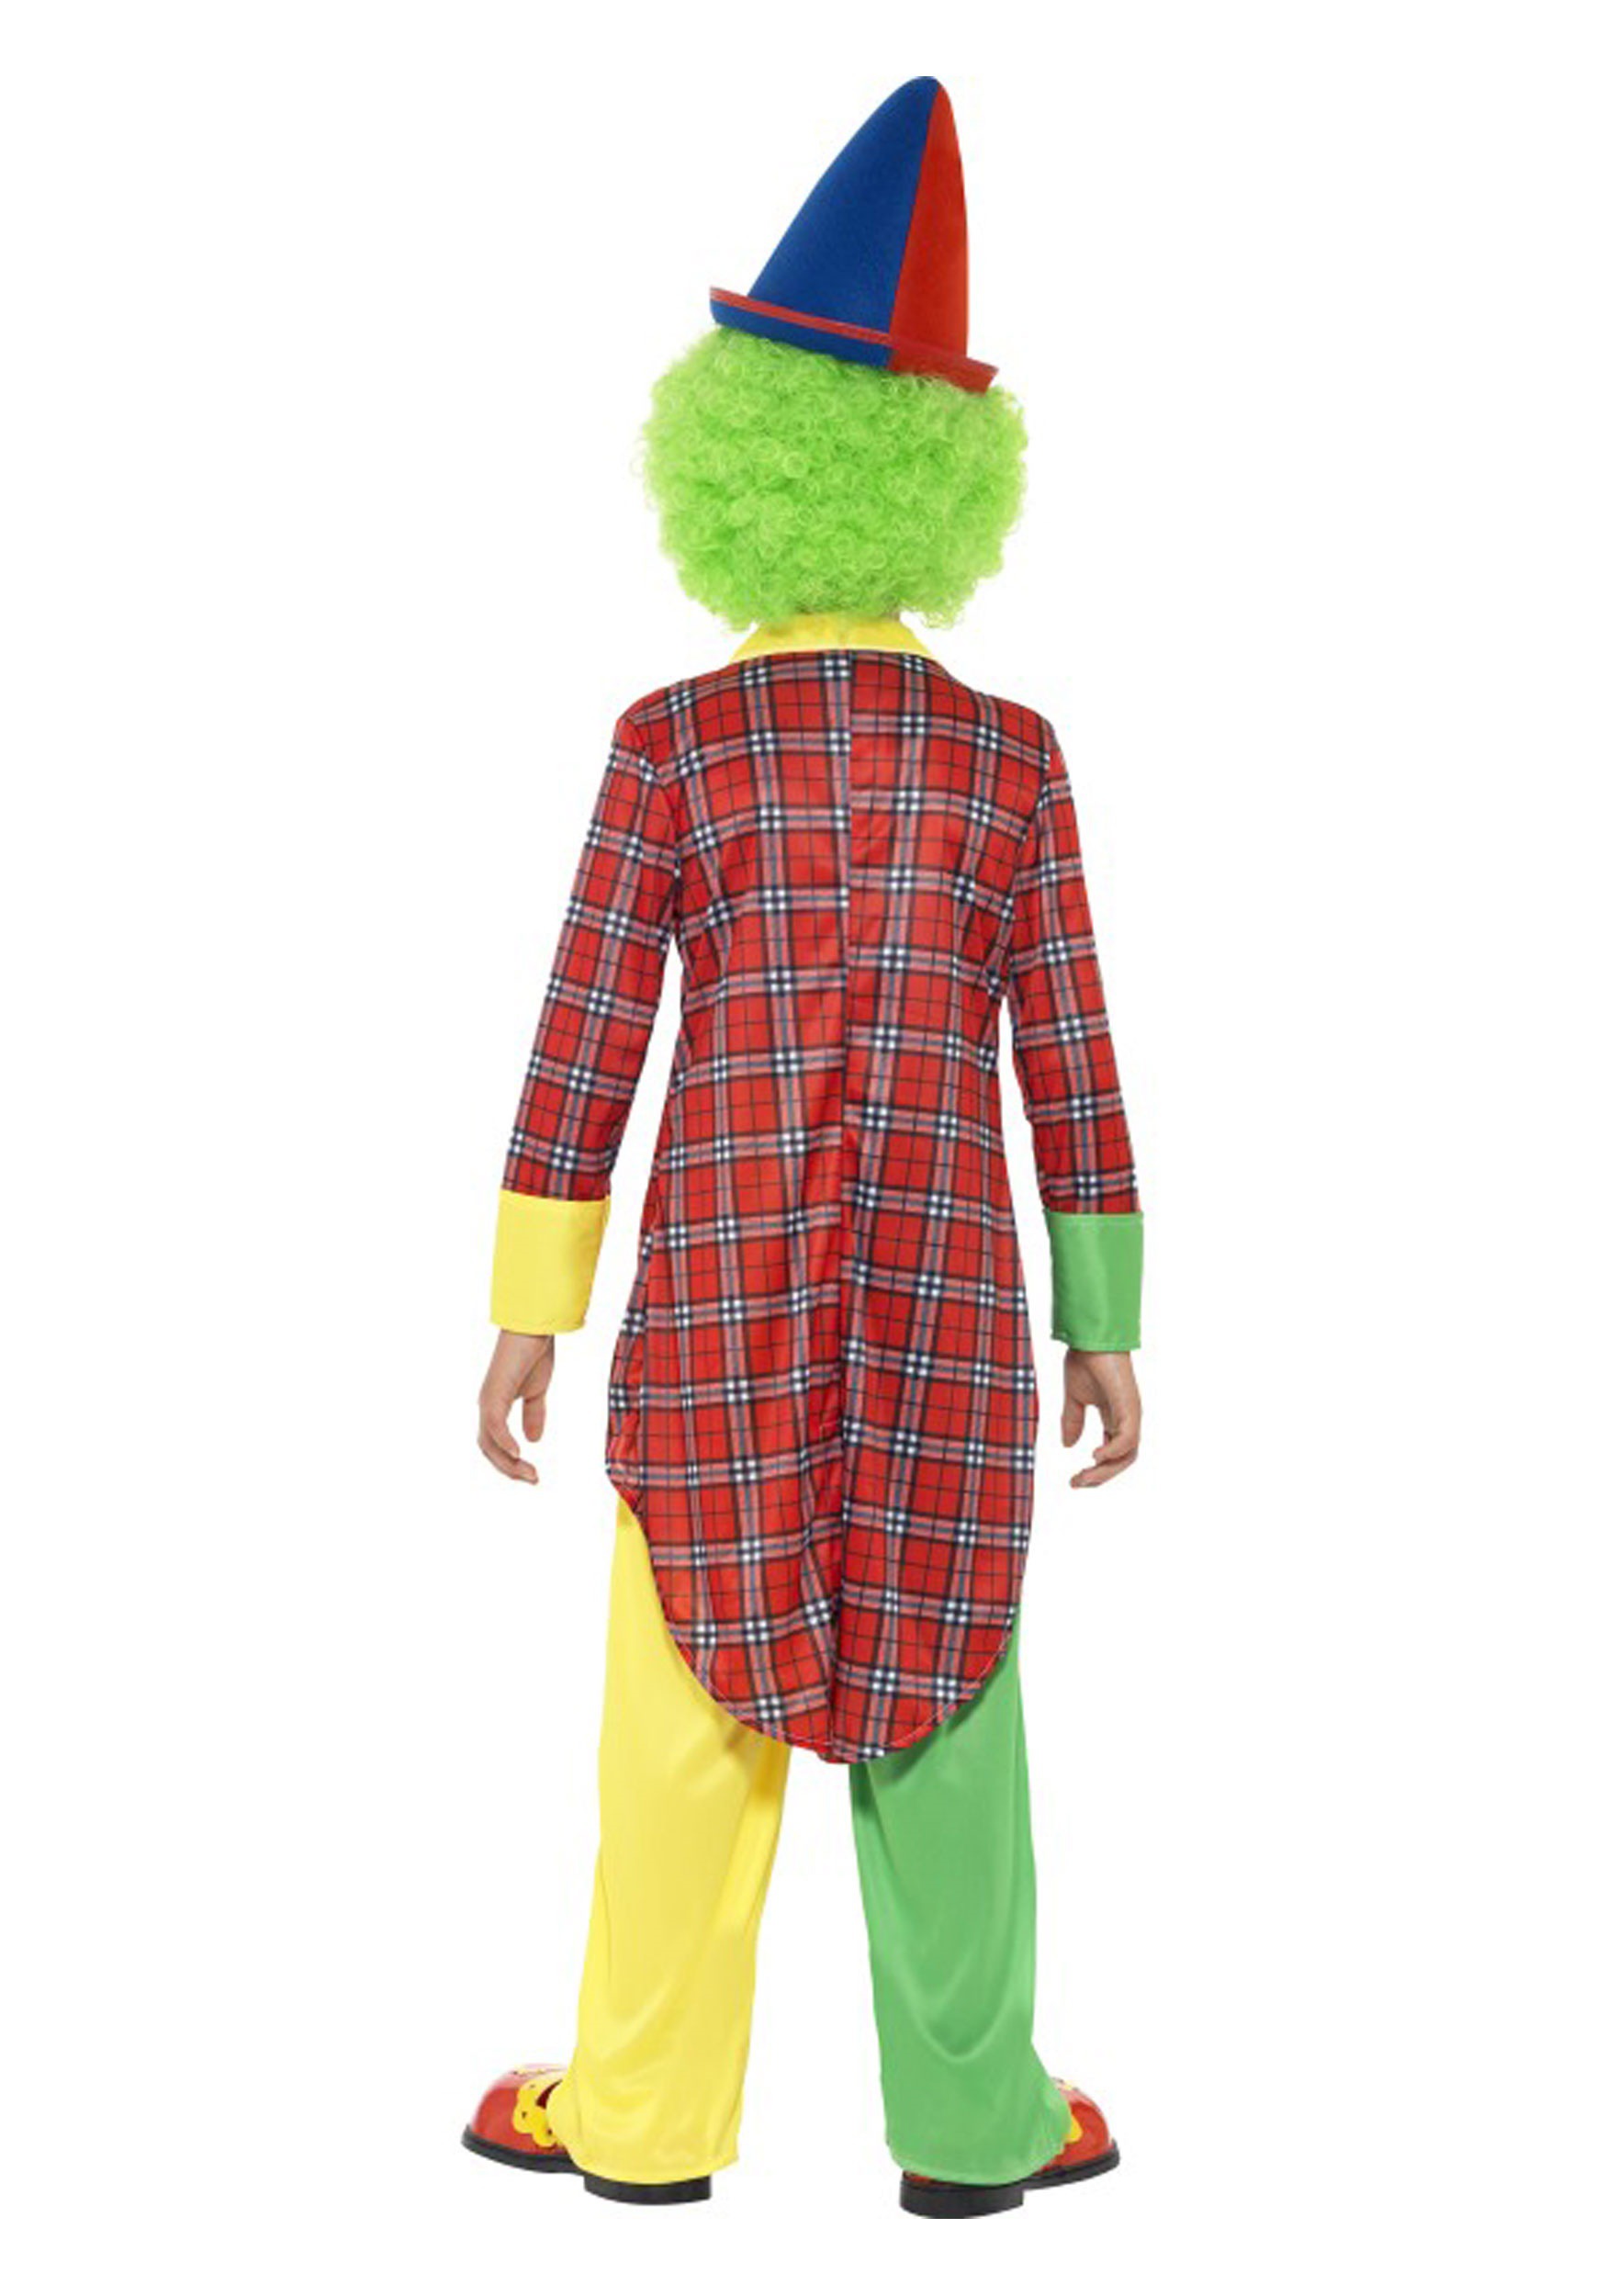 Jumbo Phoney Clown Munchkin Rainbow Fake Lollipop Costume Accessory Prop 